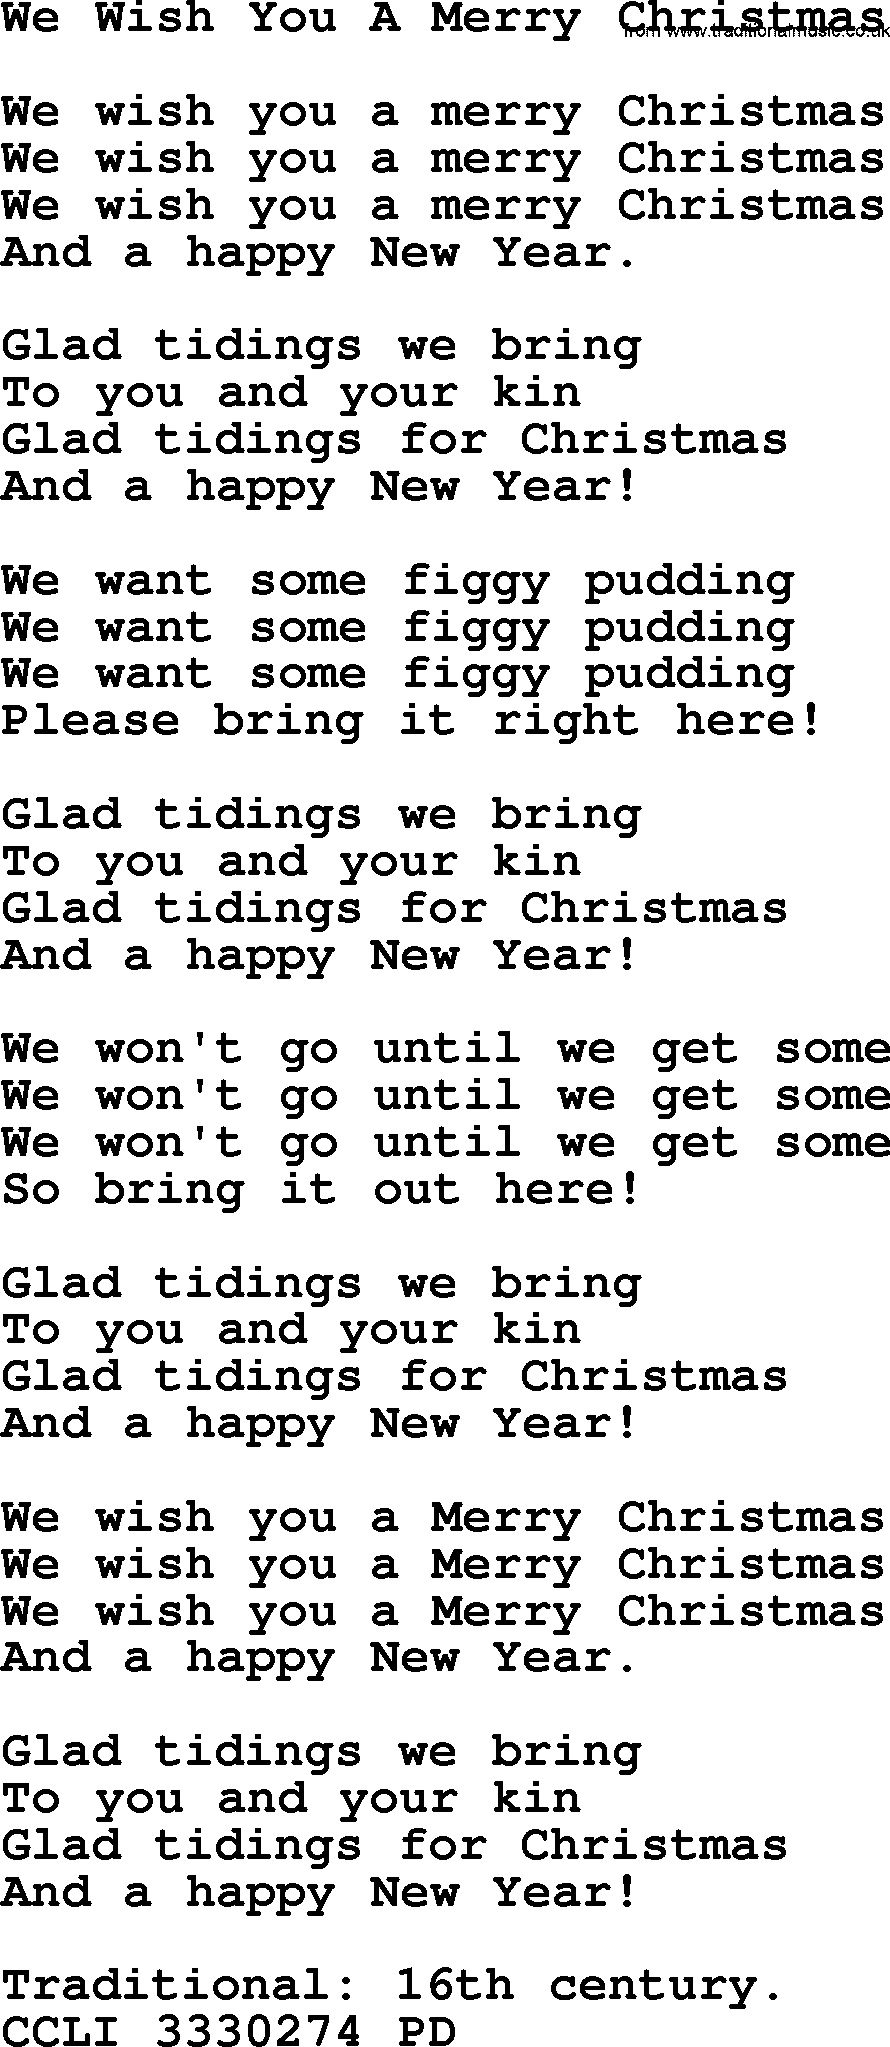 I Wanna Wish You A Merry Christmas Lyrics.